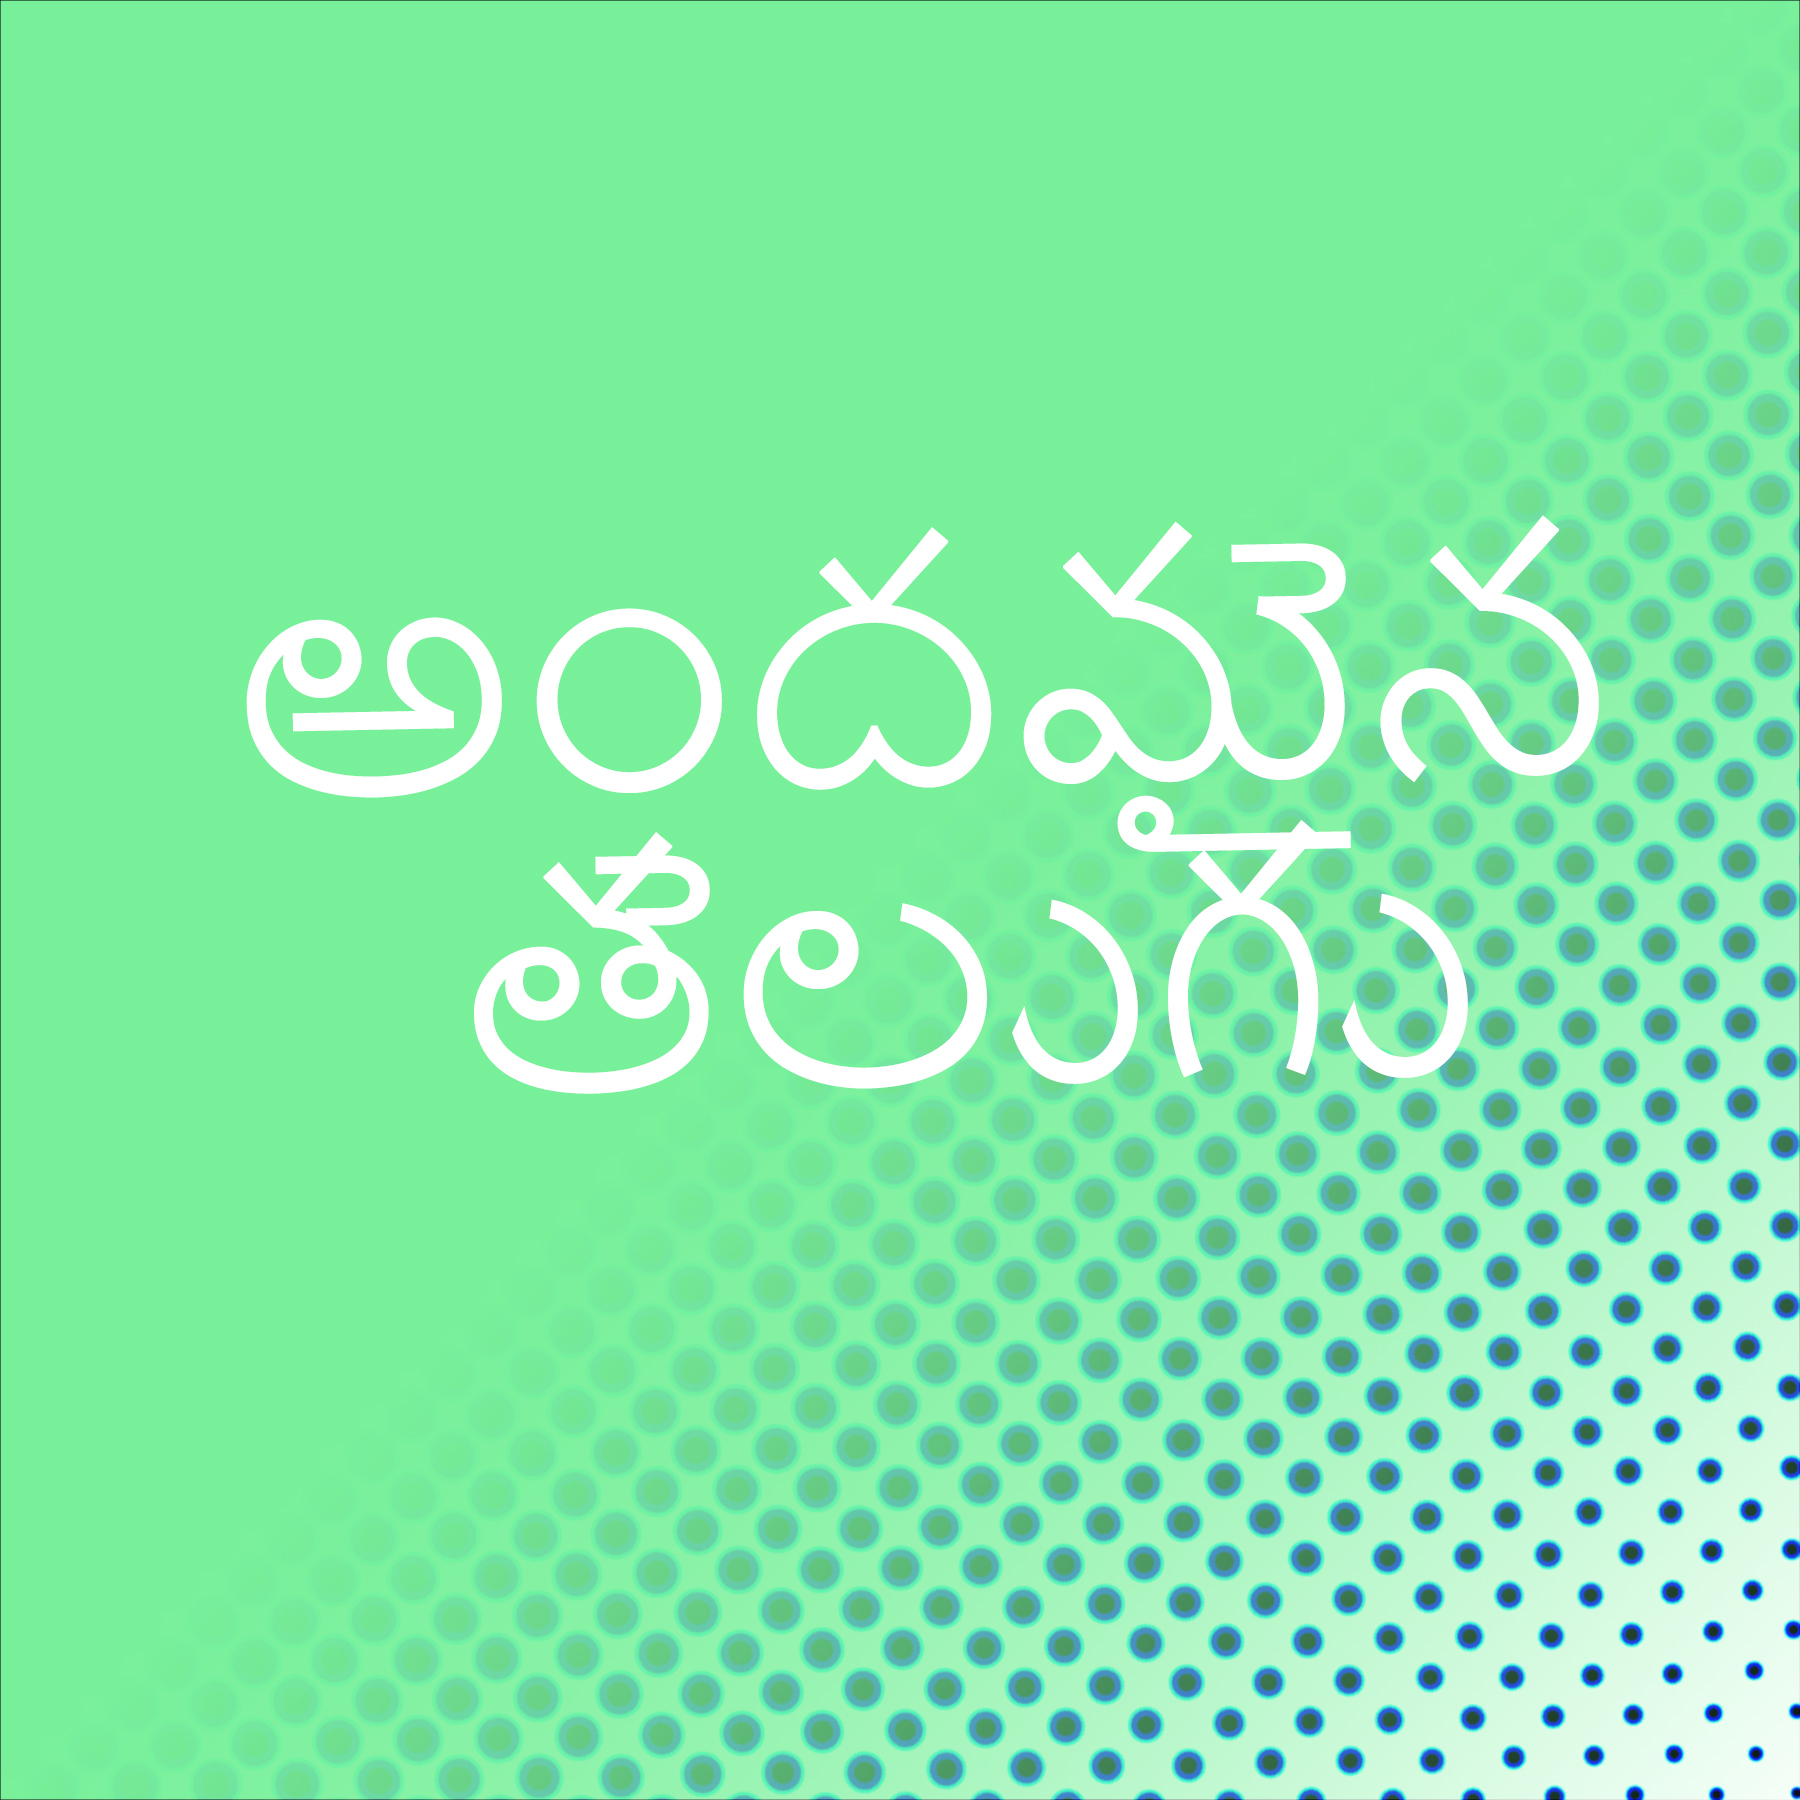 Telugu Online Language Course